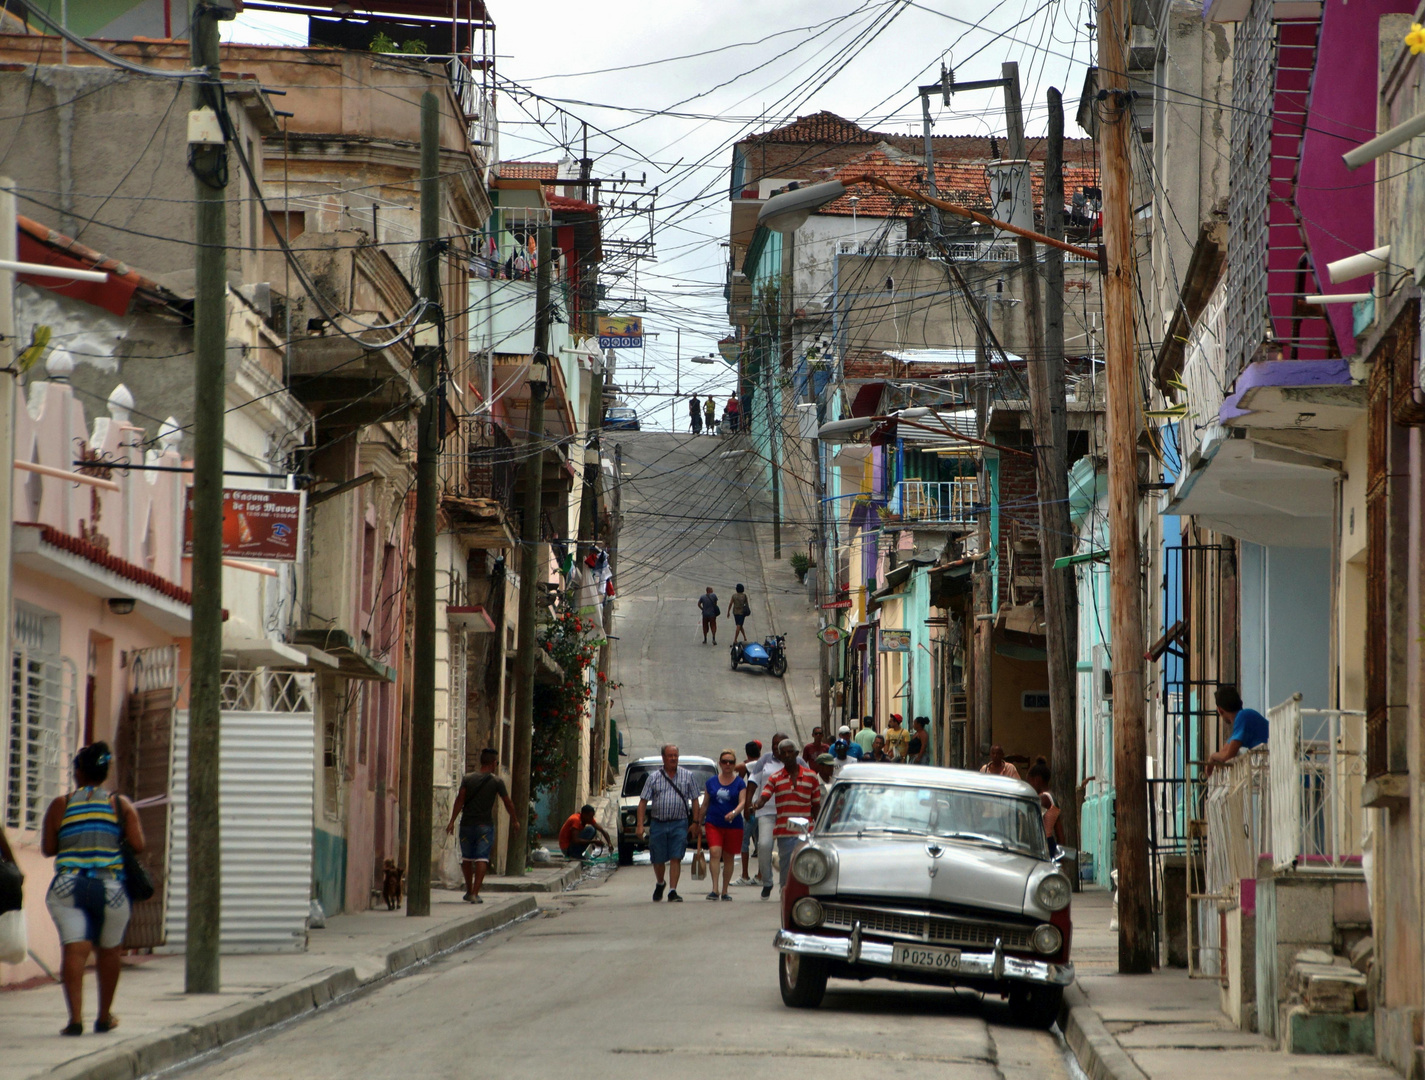 Street scene in Santiago de cuba 01